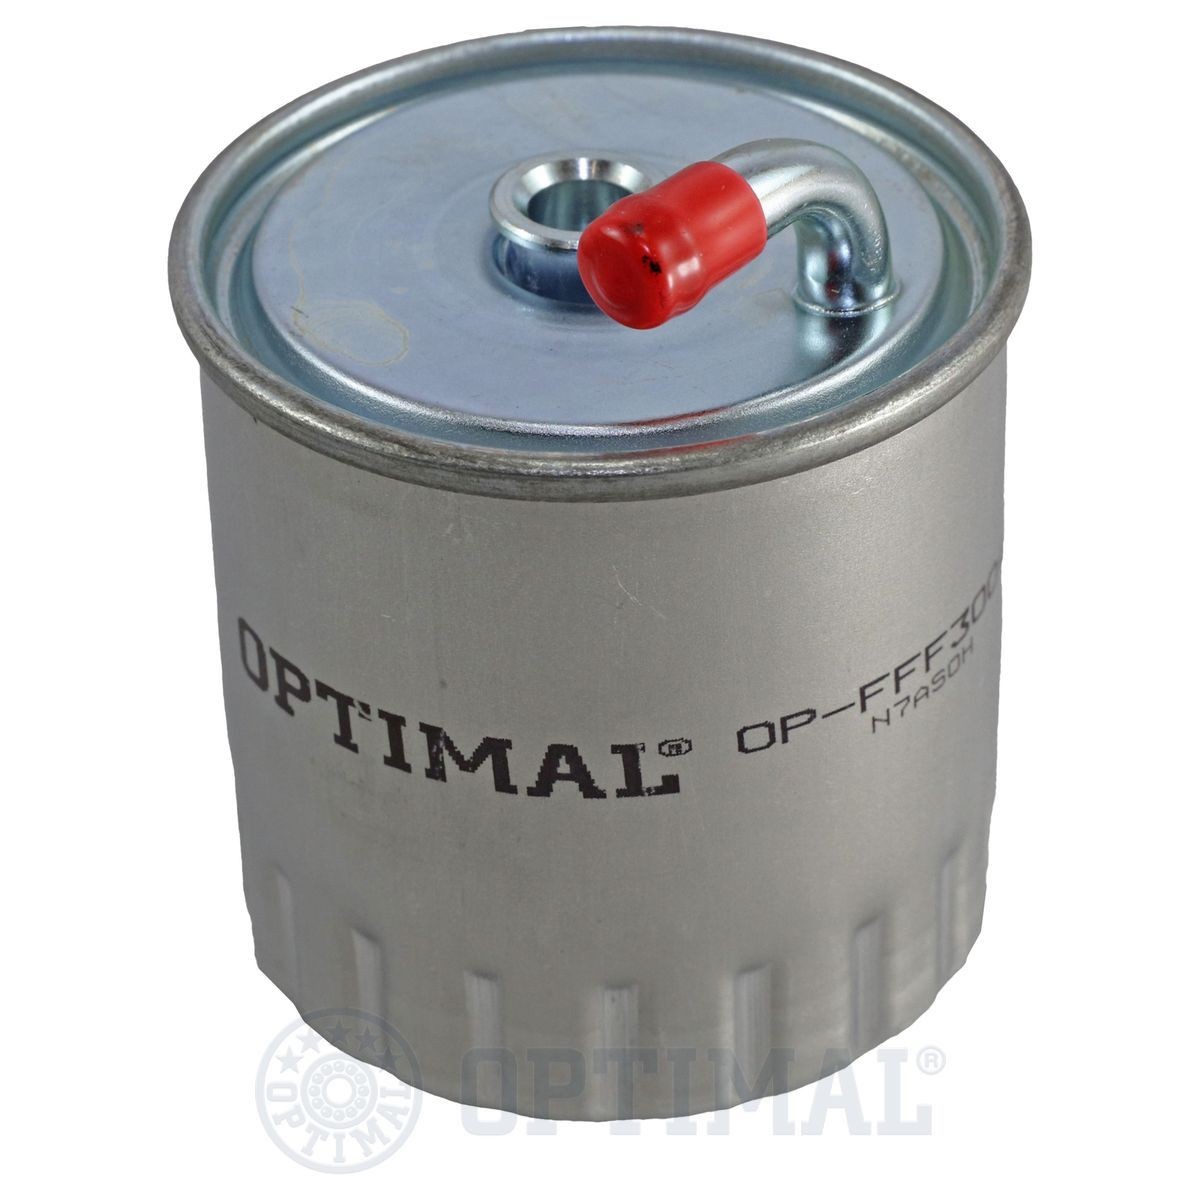 OPTIMAL OP-FFF30049 Fuel filter A611 092 00 01 67